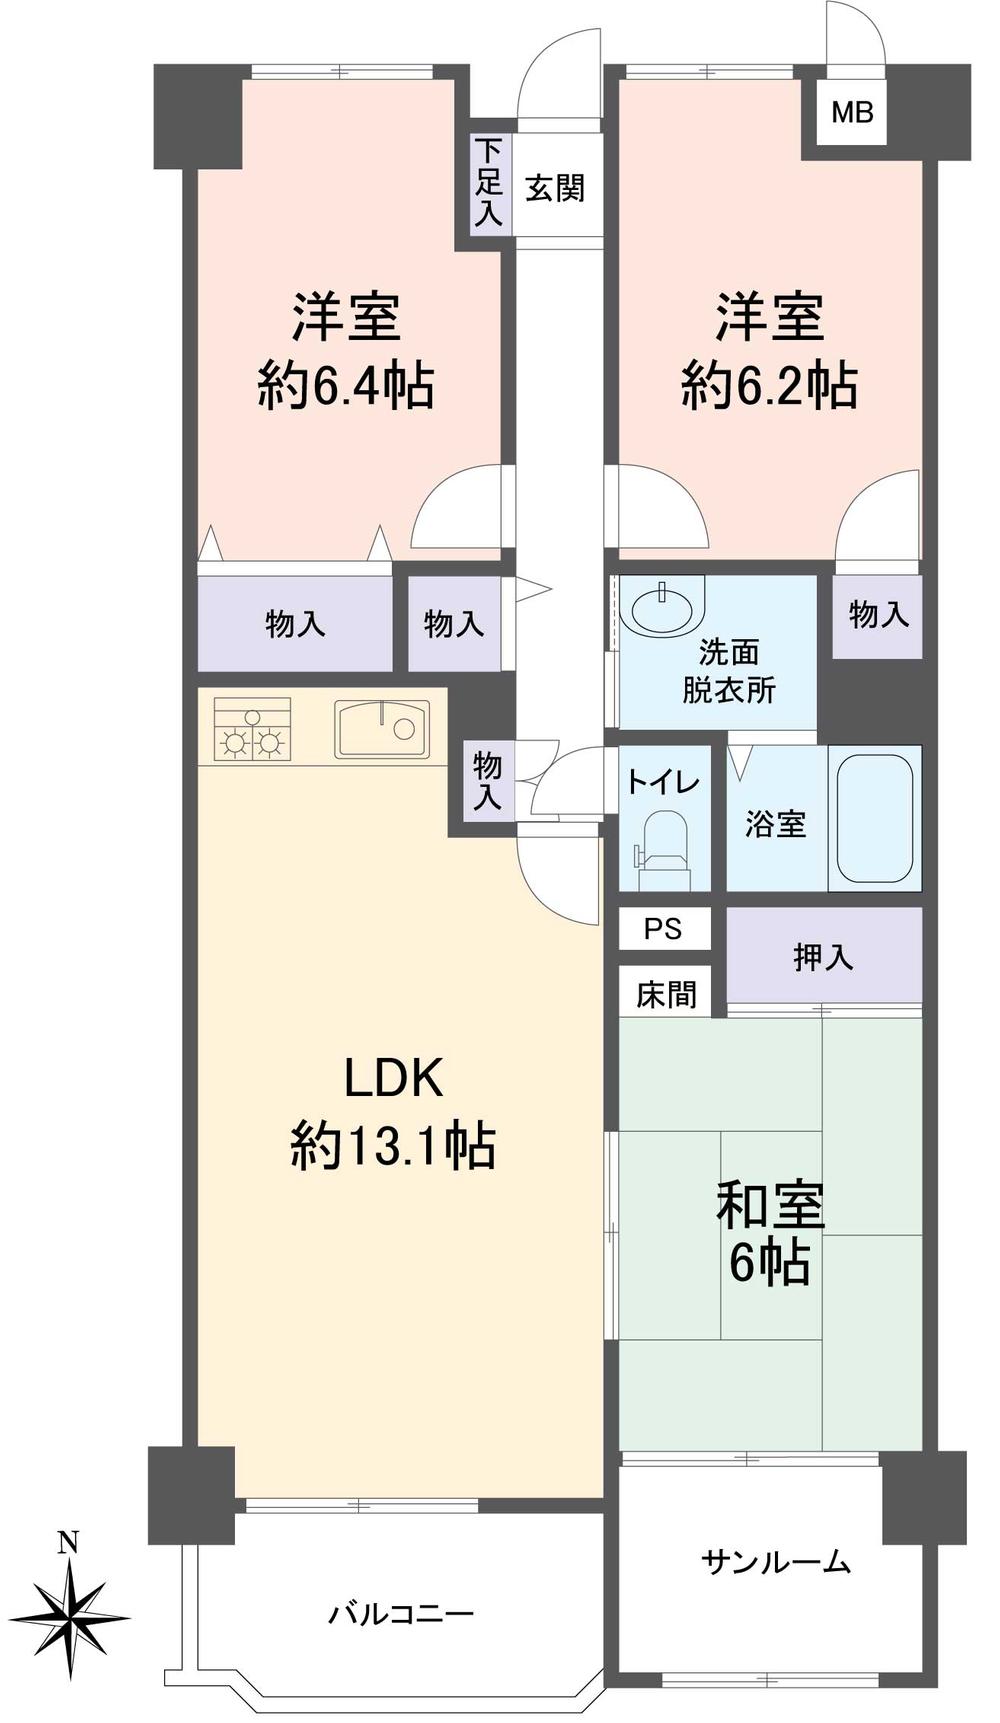 Floor plan. 3LDK, Price 10.5 million yen, Occupied area 81.96 sq m , Balcony area 5.79 sq m